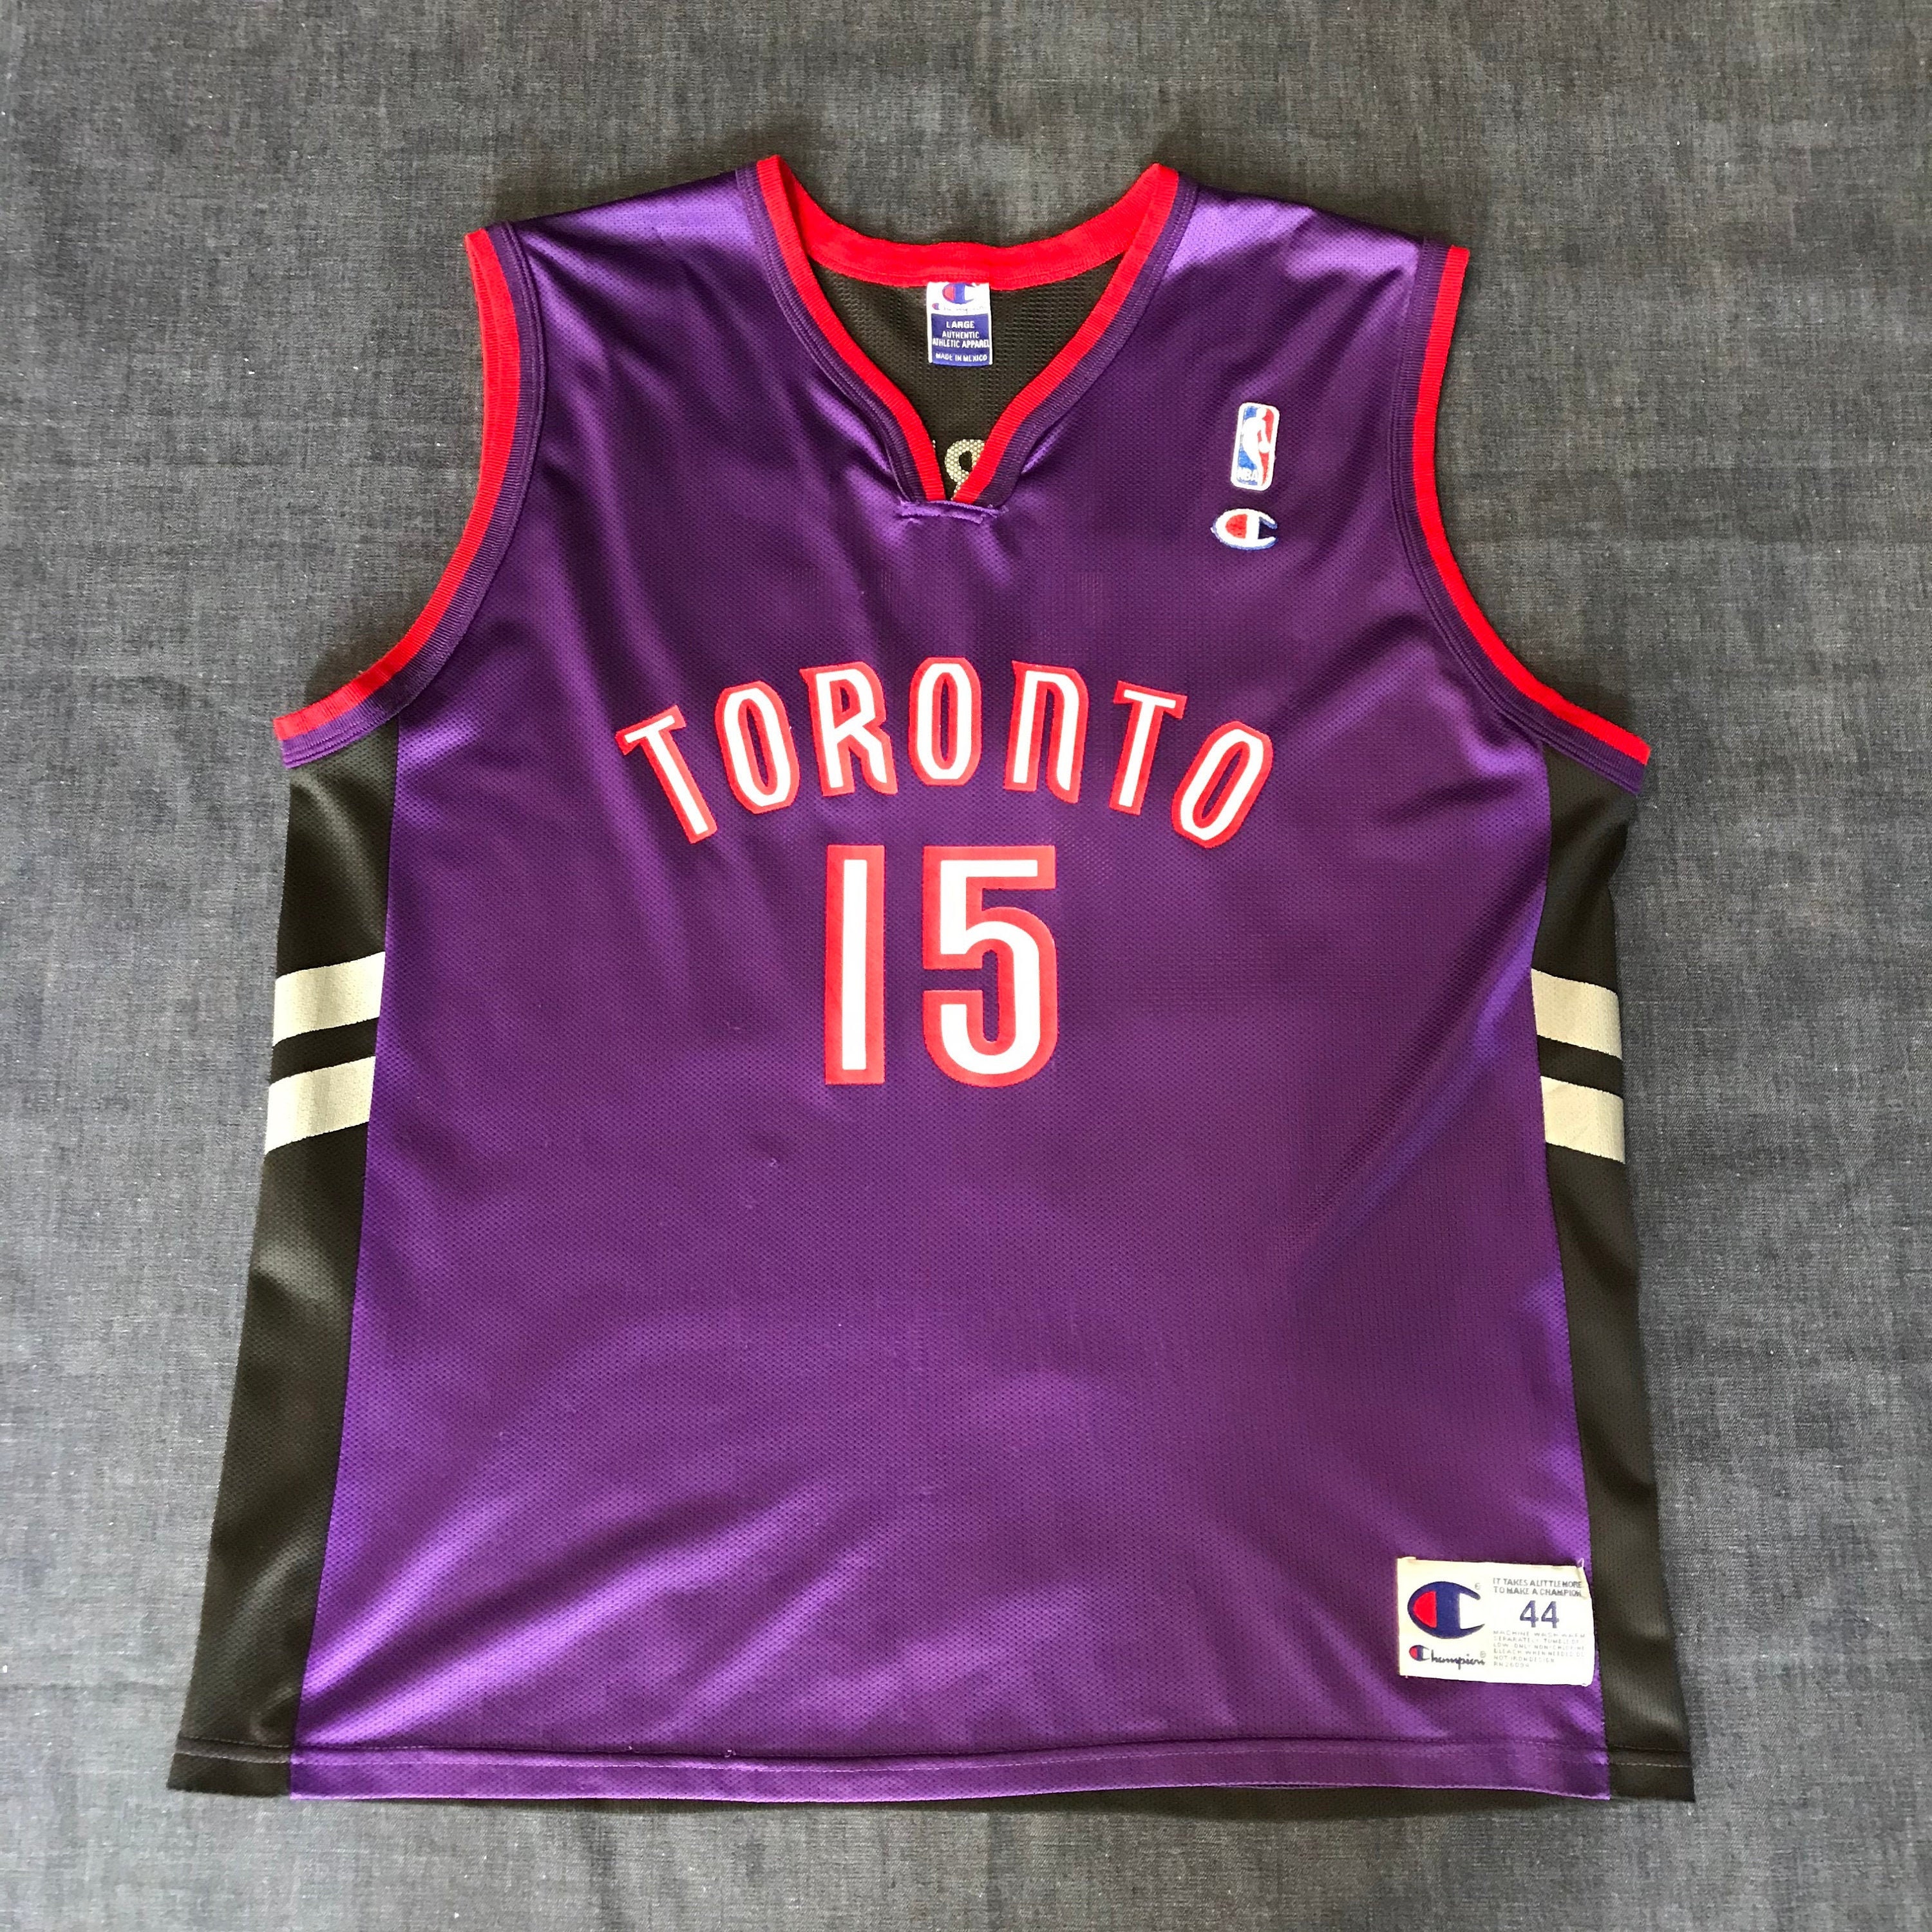 Toronto Raptors NBA Championship Collection: Shirts, Hats, Jerseys